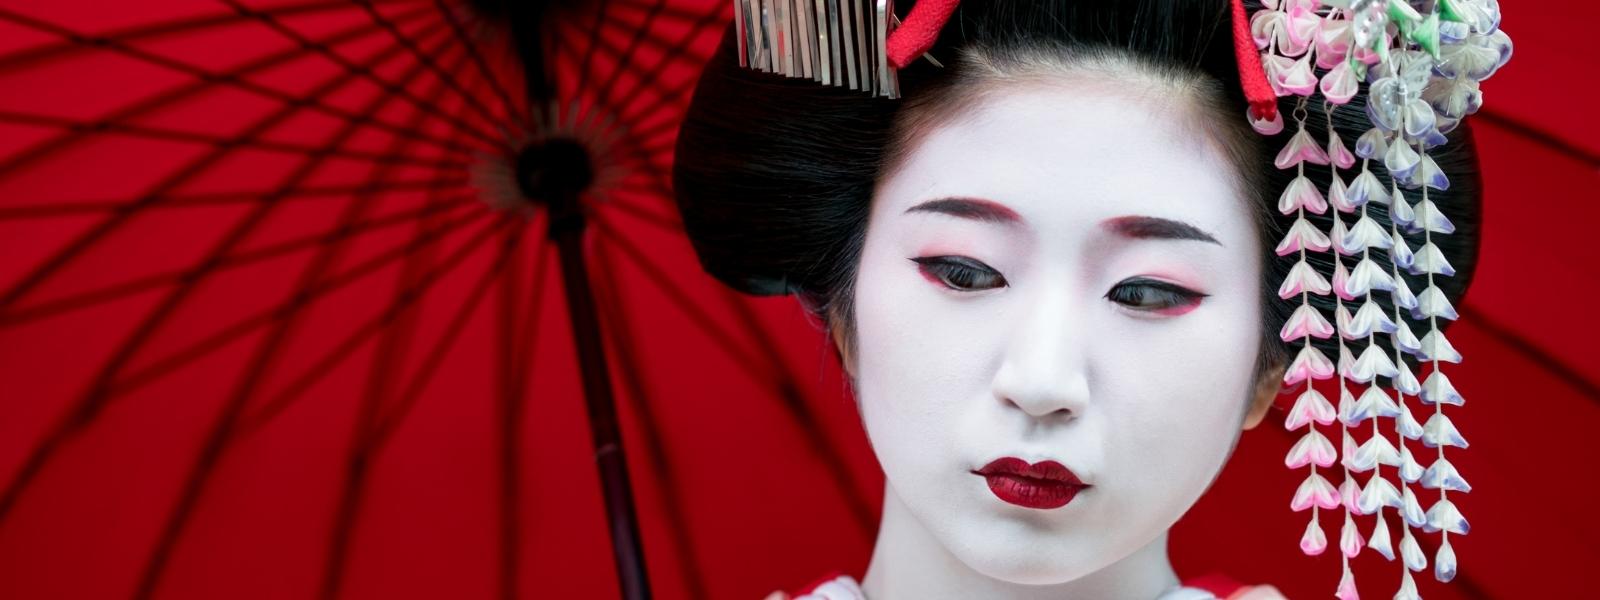 Geisha traditionnelle